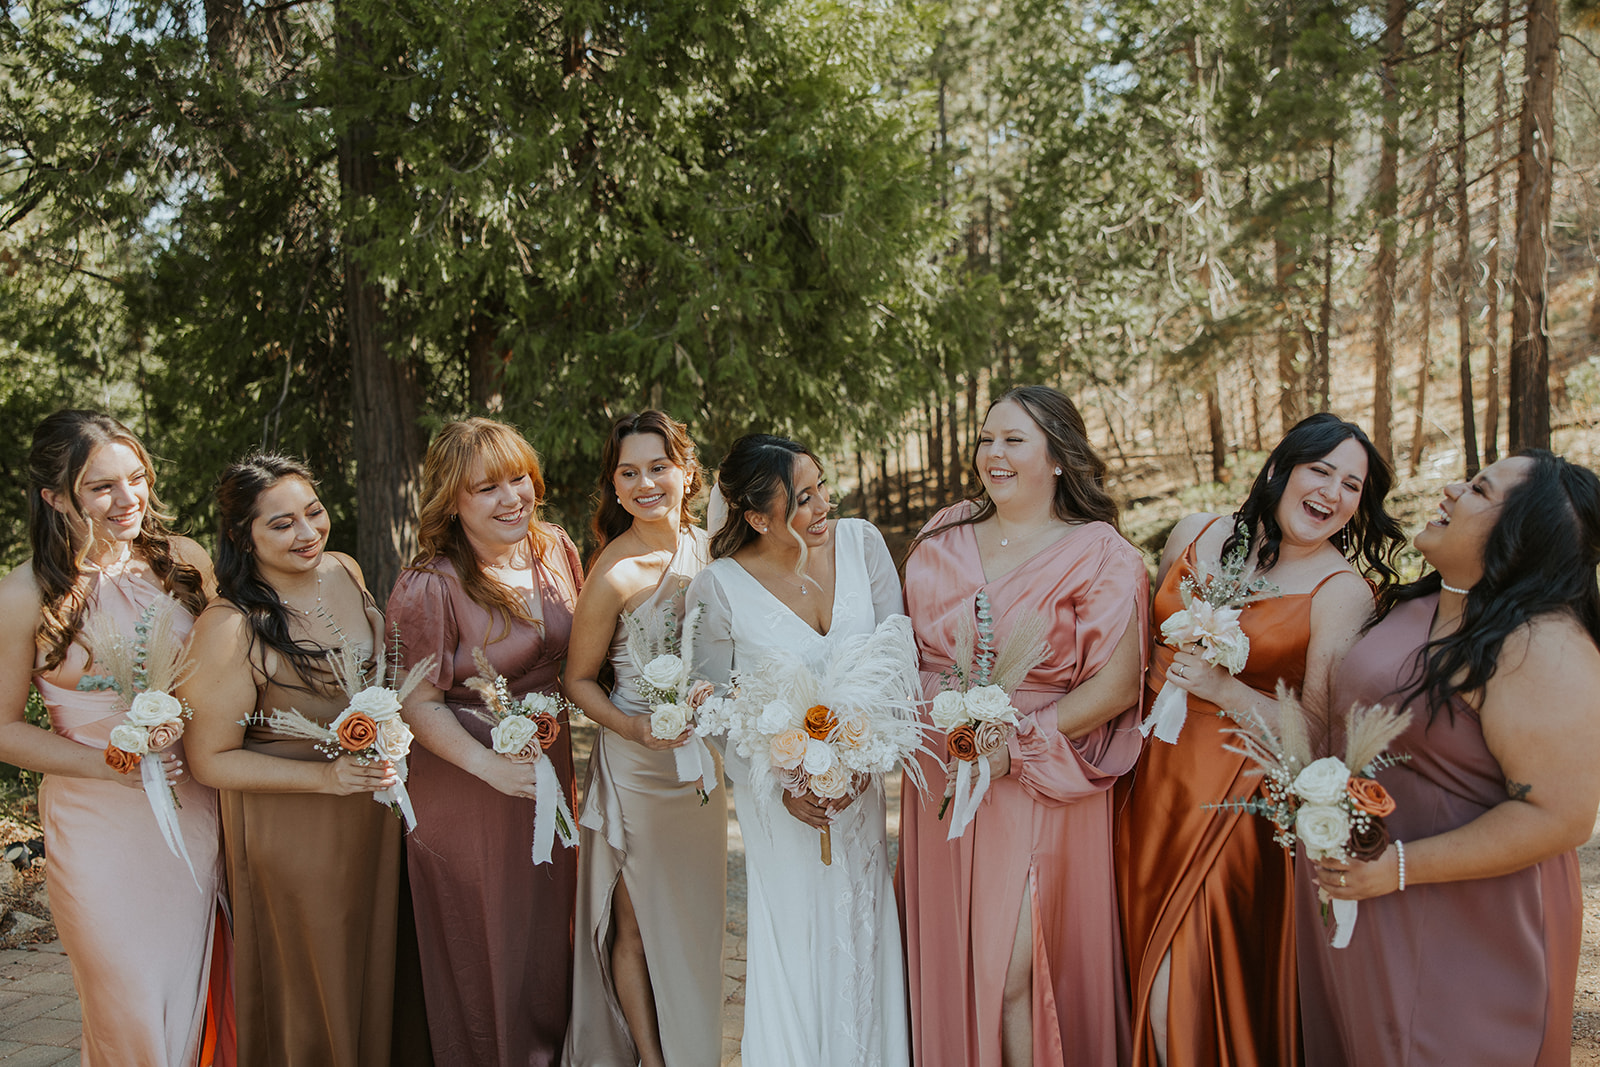 bride and bridesmaids photos from a California mountain wedding at lillaskog lodge